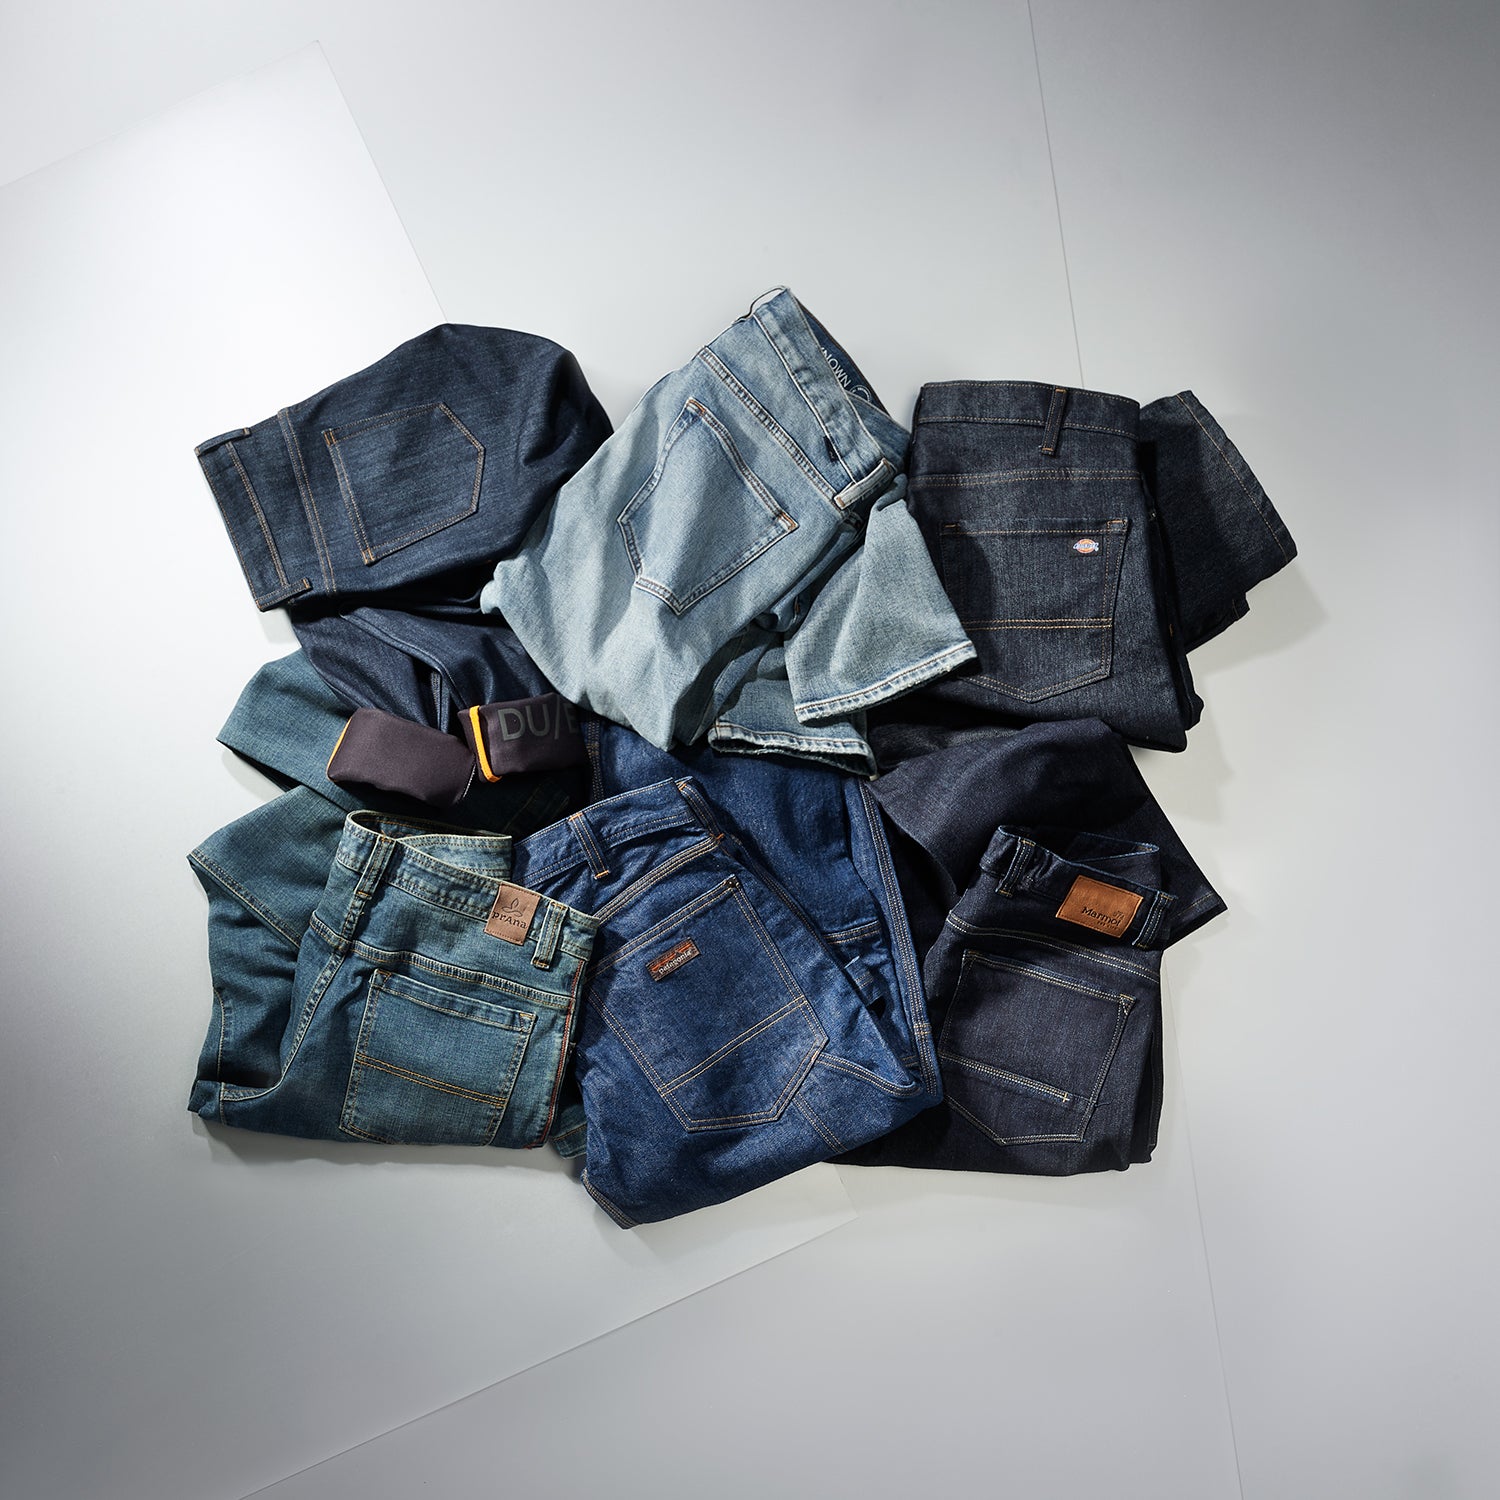 Mens Jeep Brand Jeans TEFLON HT 42X30 classic blue denim, wear resistant  pants | eBay